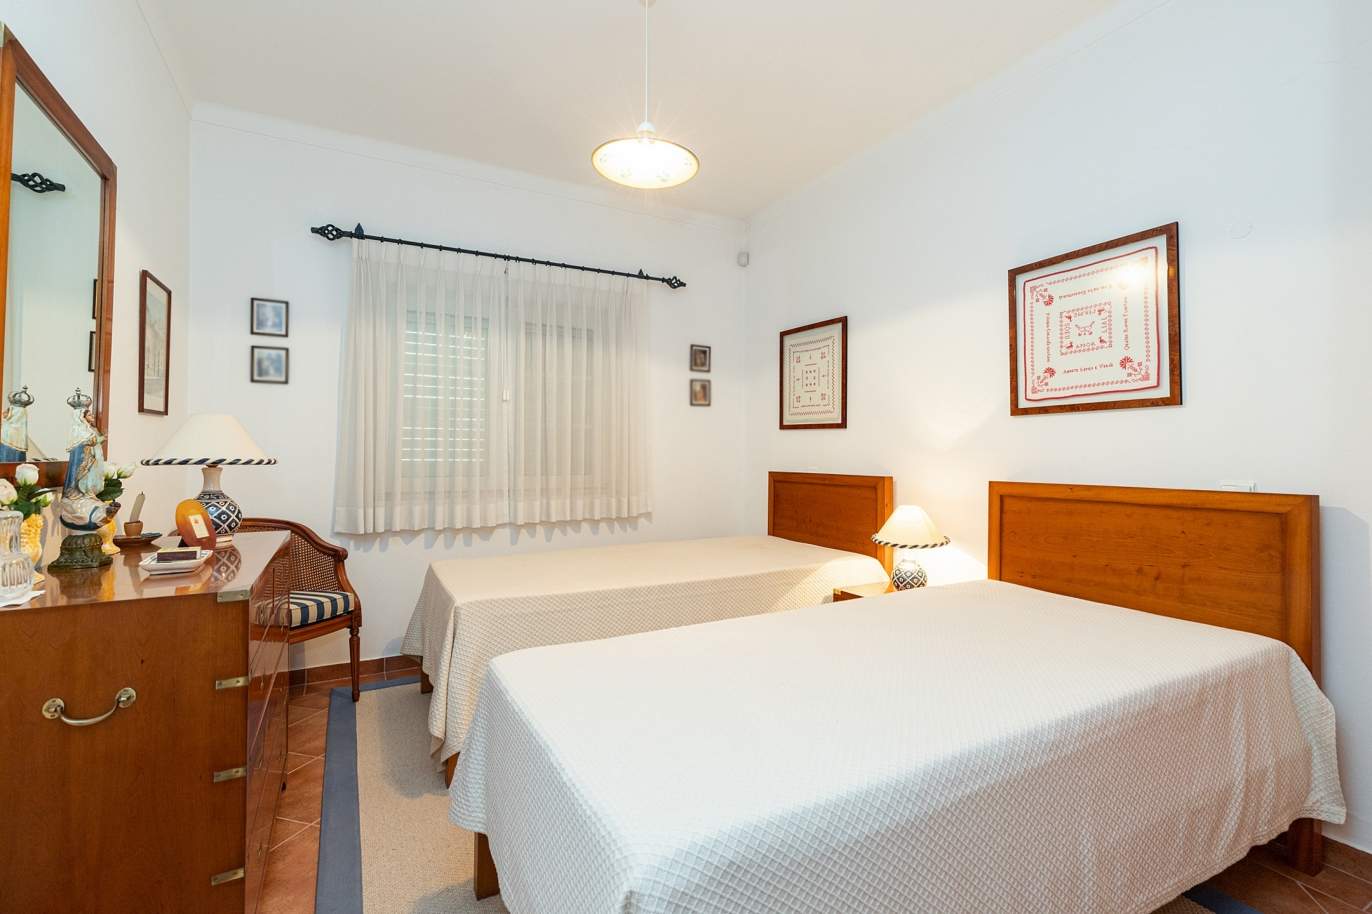 5 Bedroom Villa, near the beach, for sale in Carvoeiro, Algarve_191910